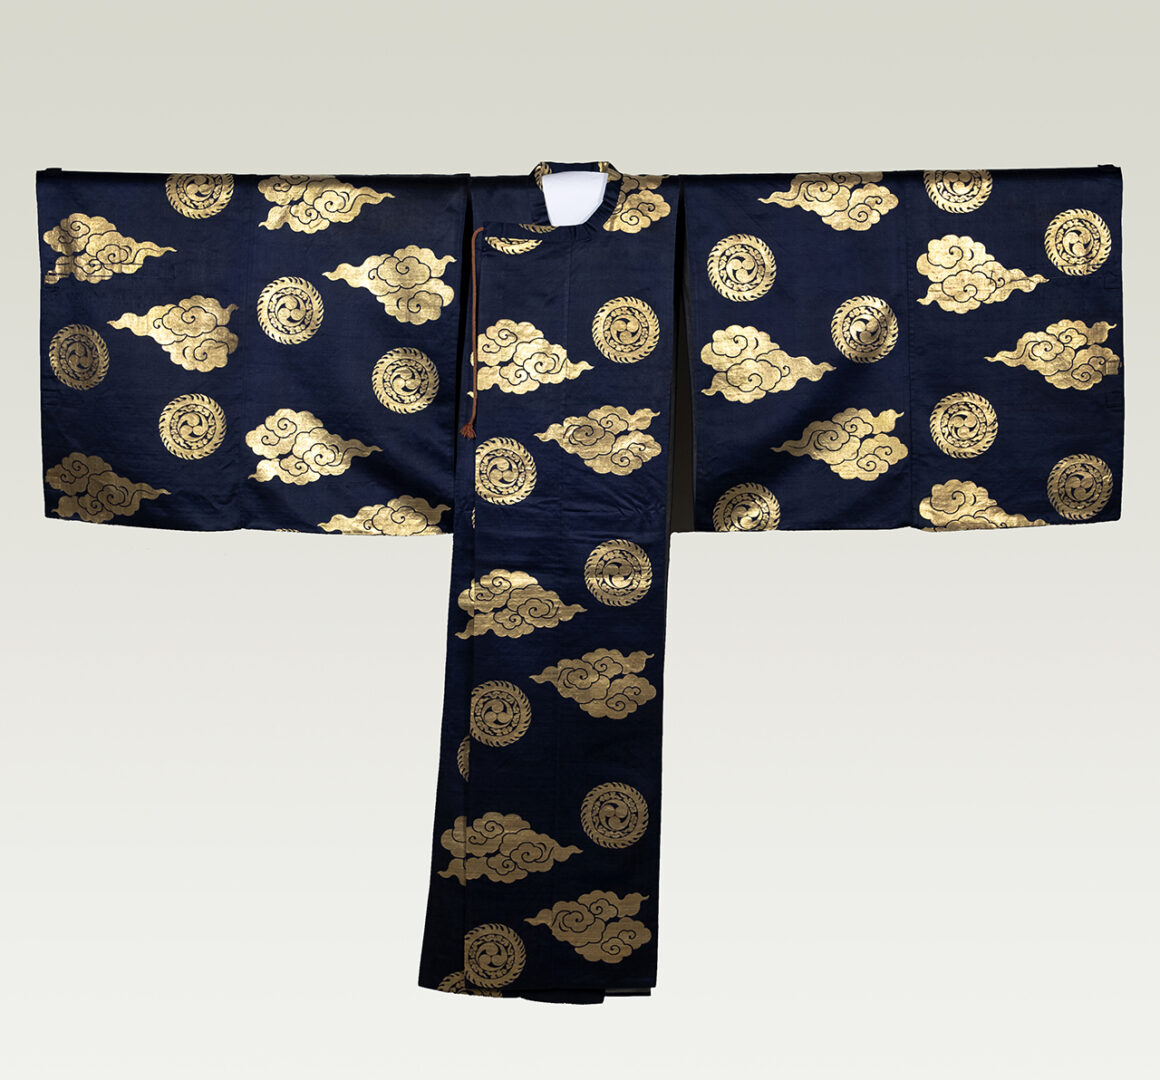 Awase Kariginu, 19th century, Silk, gold, paper, Venice, Museum of Oriental Art